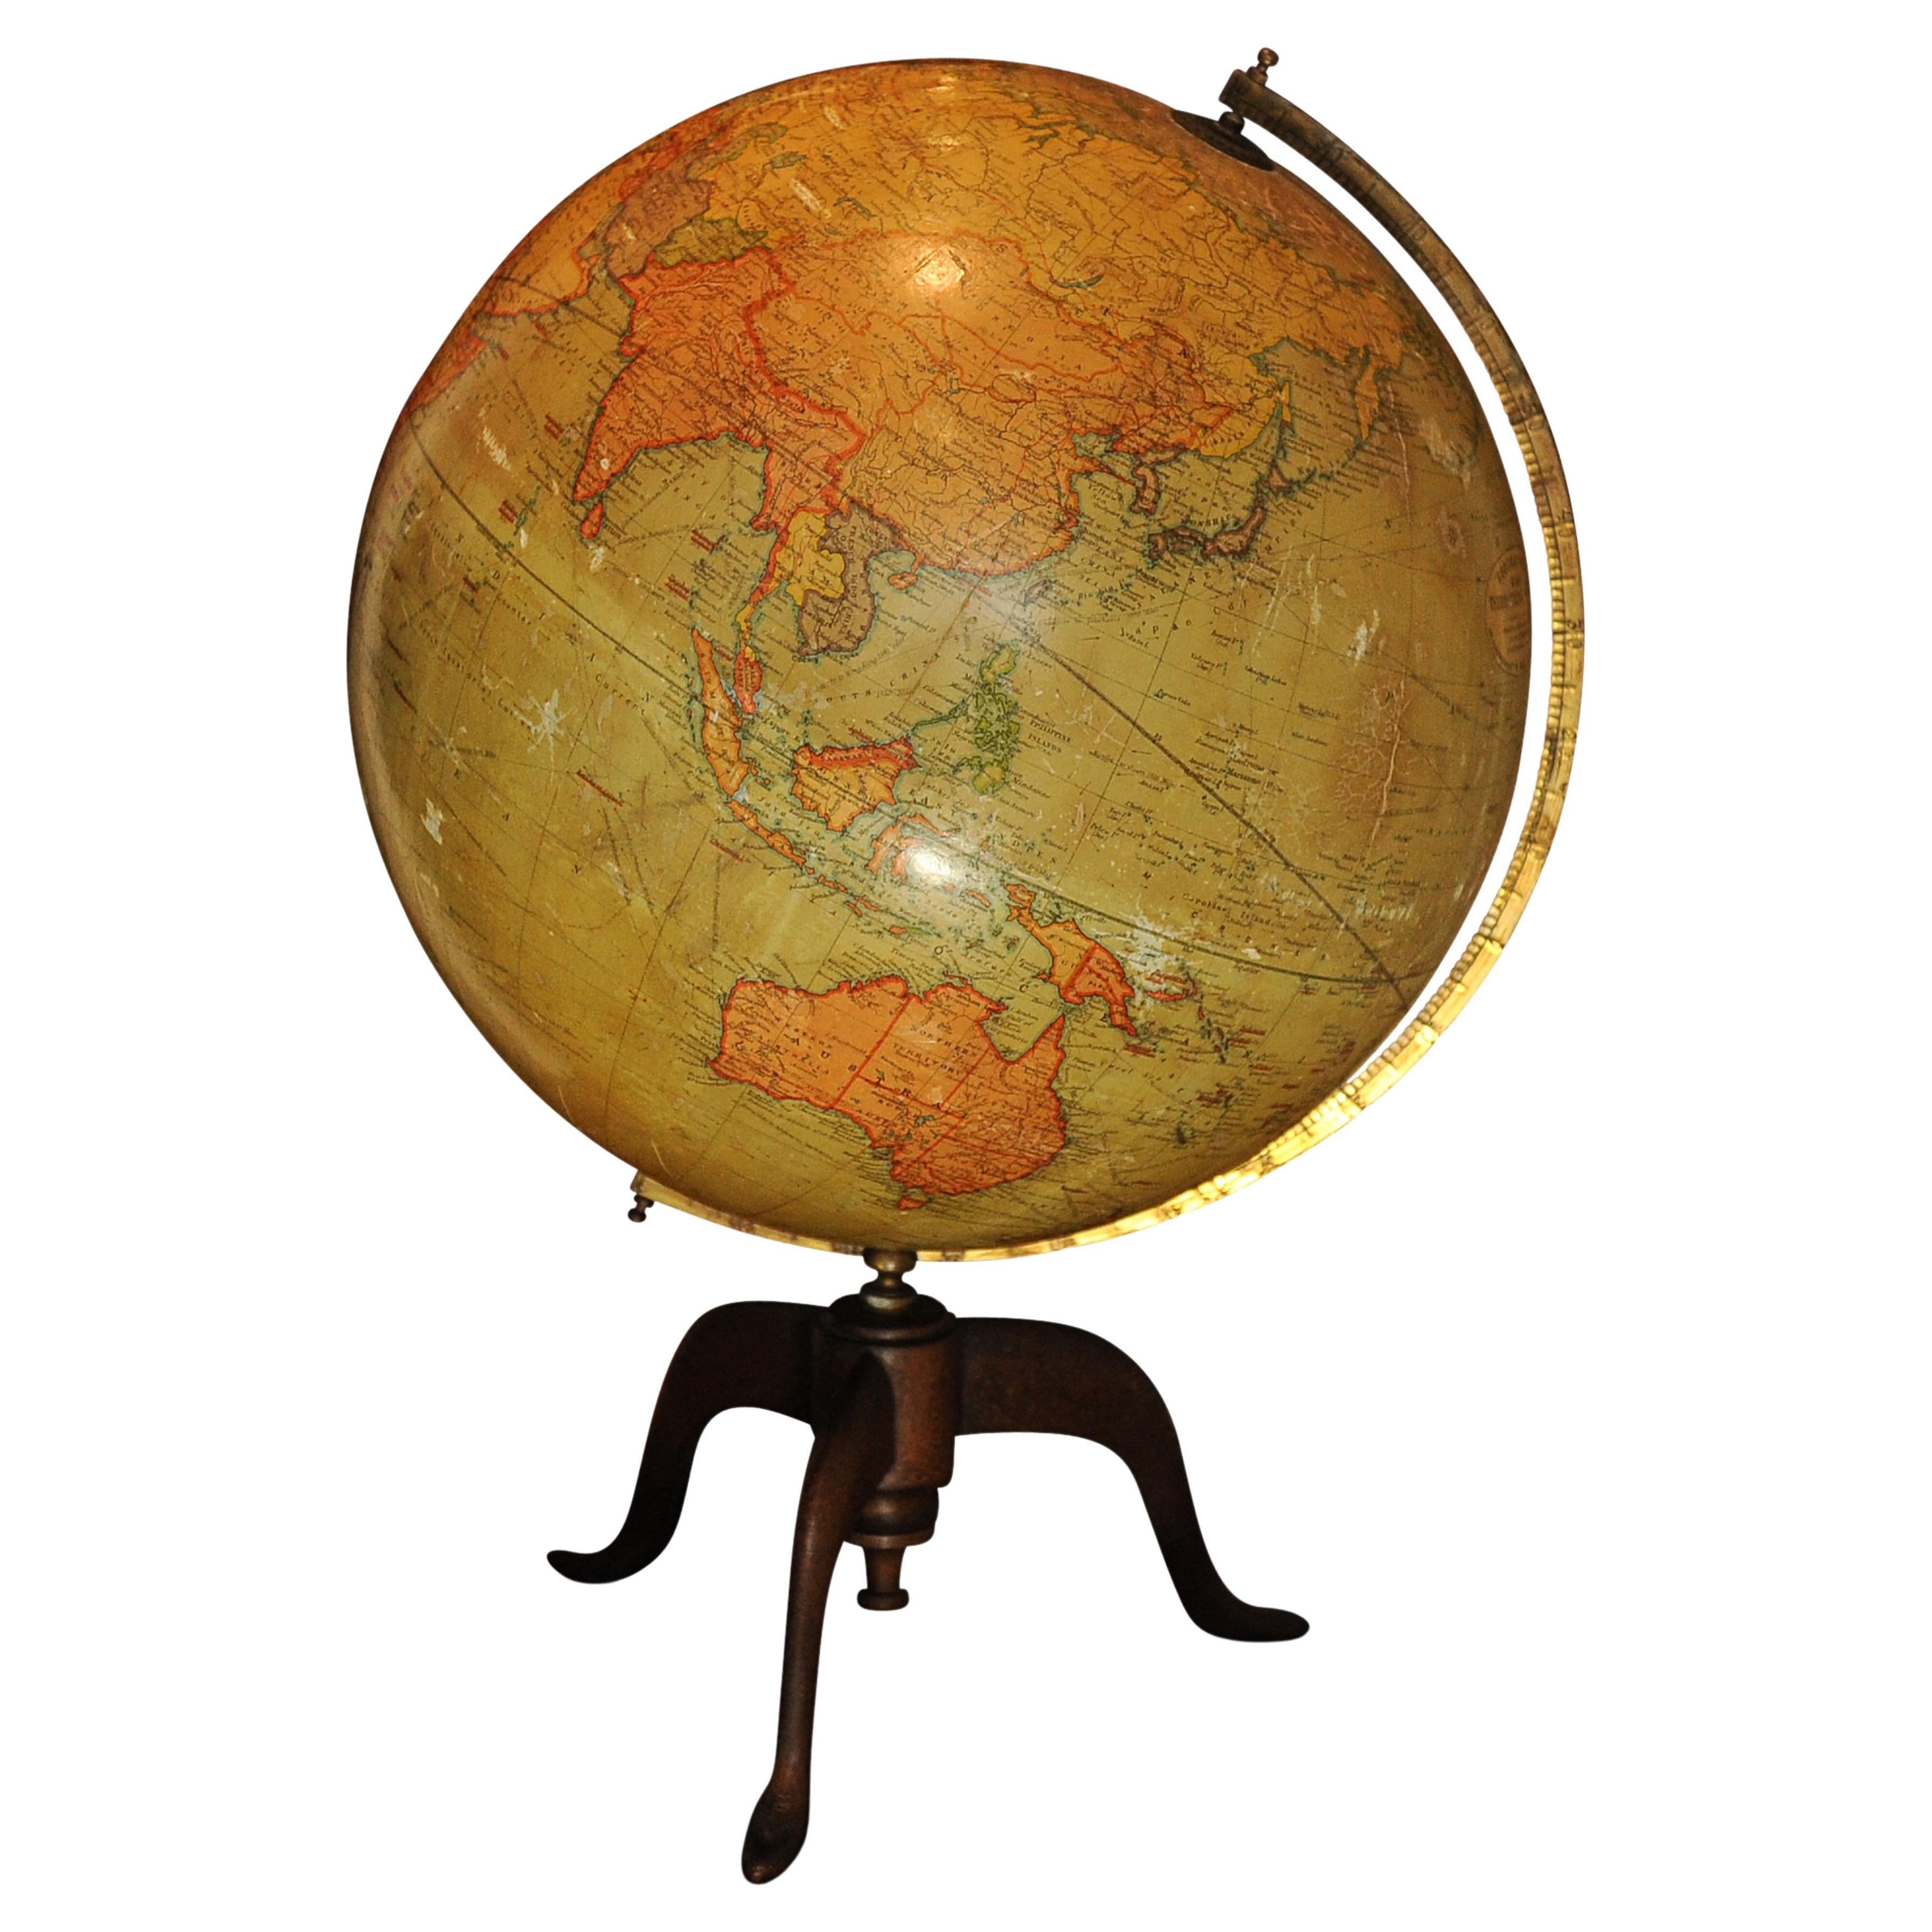 Antique World Globe From Fleet Street London 1923 on Wooden Stand